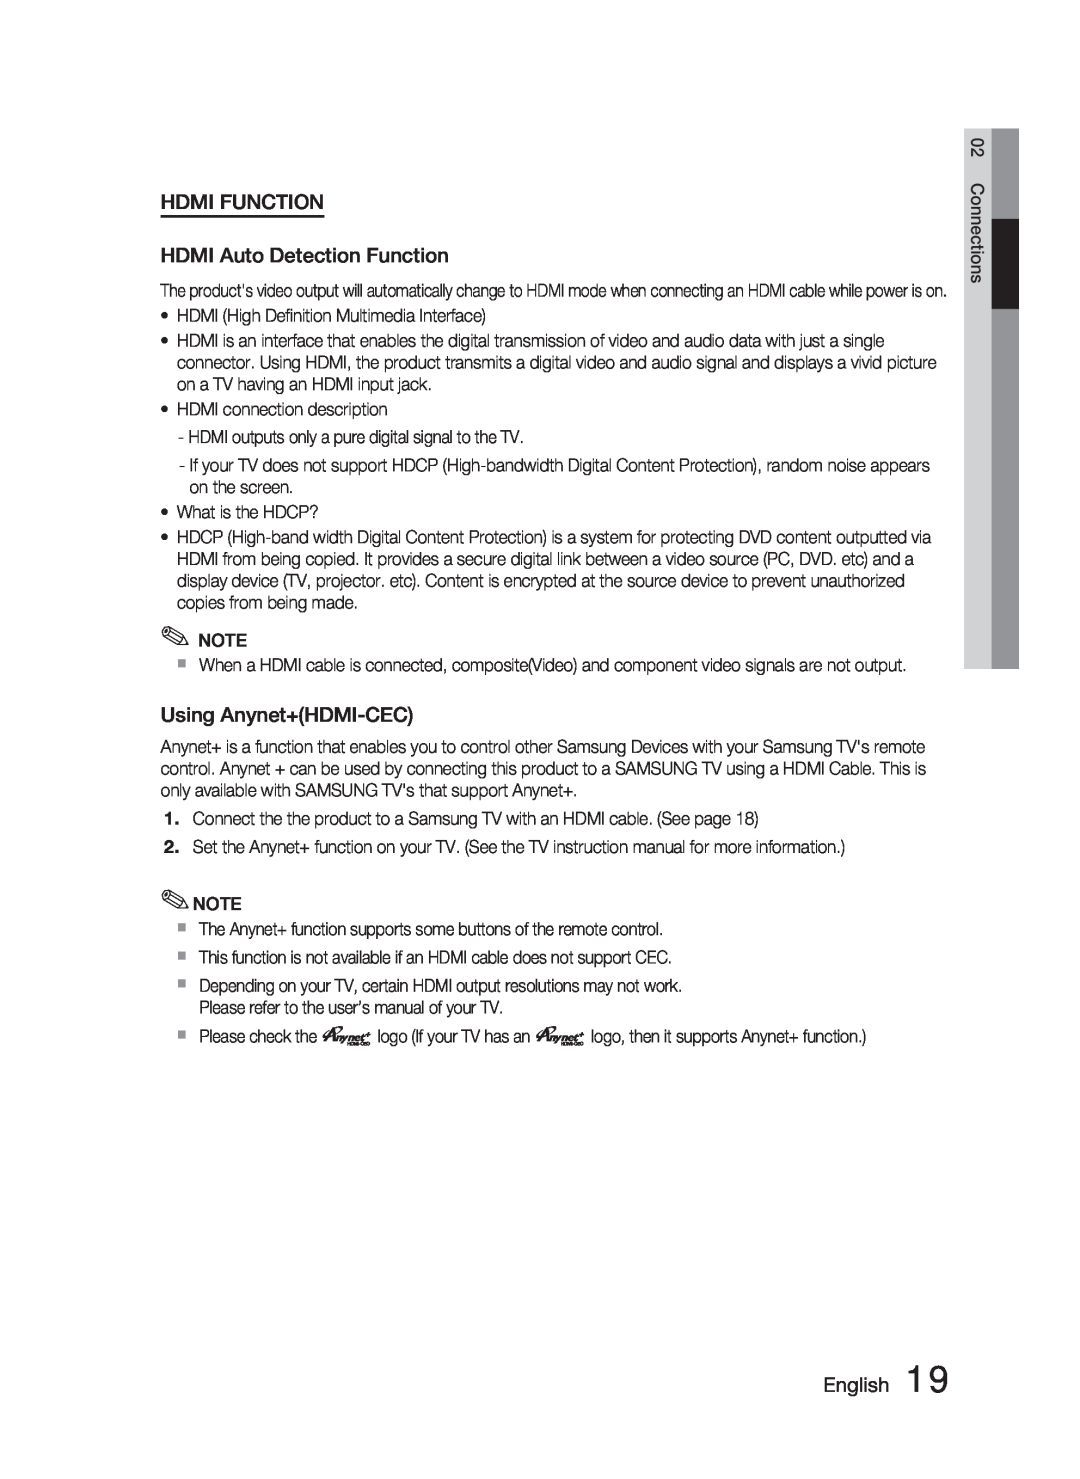 Samsung HT-C463-XAC, AH68-02259Q user manual HDMI FUNCTION HDMI Auto Detection Function, Using Anynet+HDMI-CEC, English 